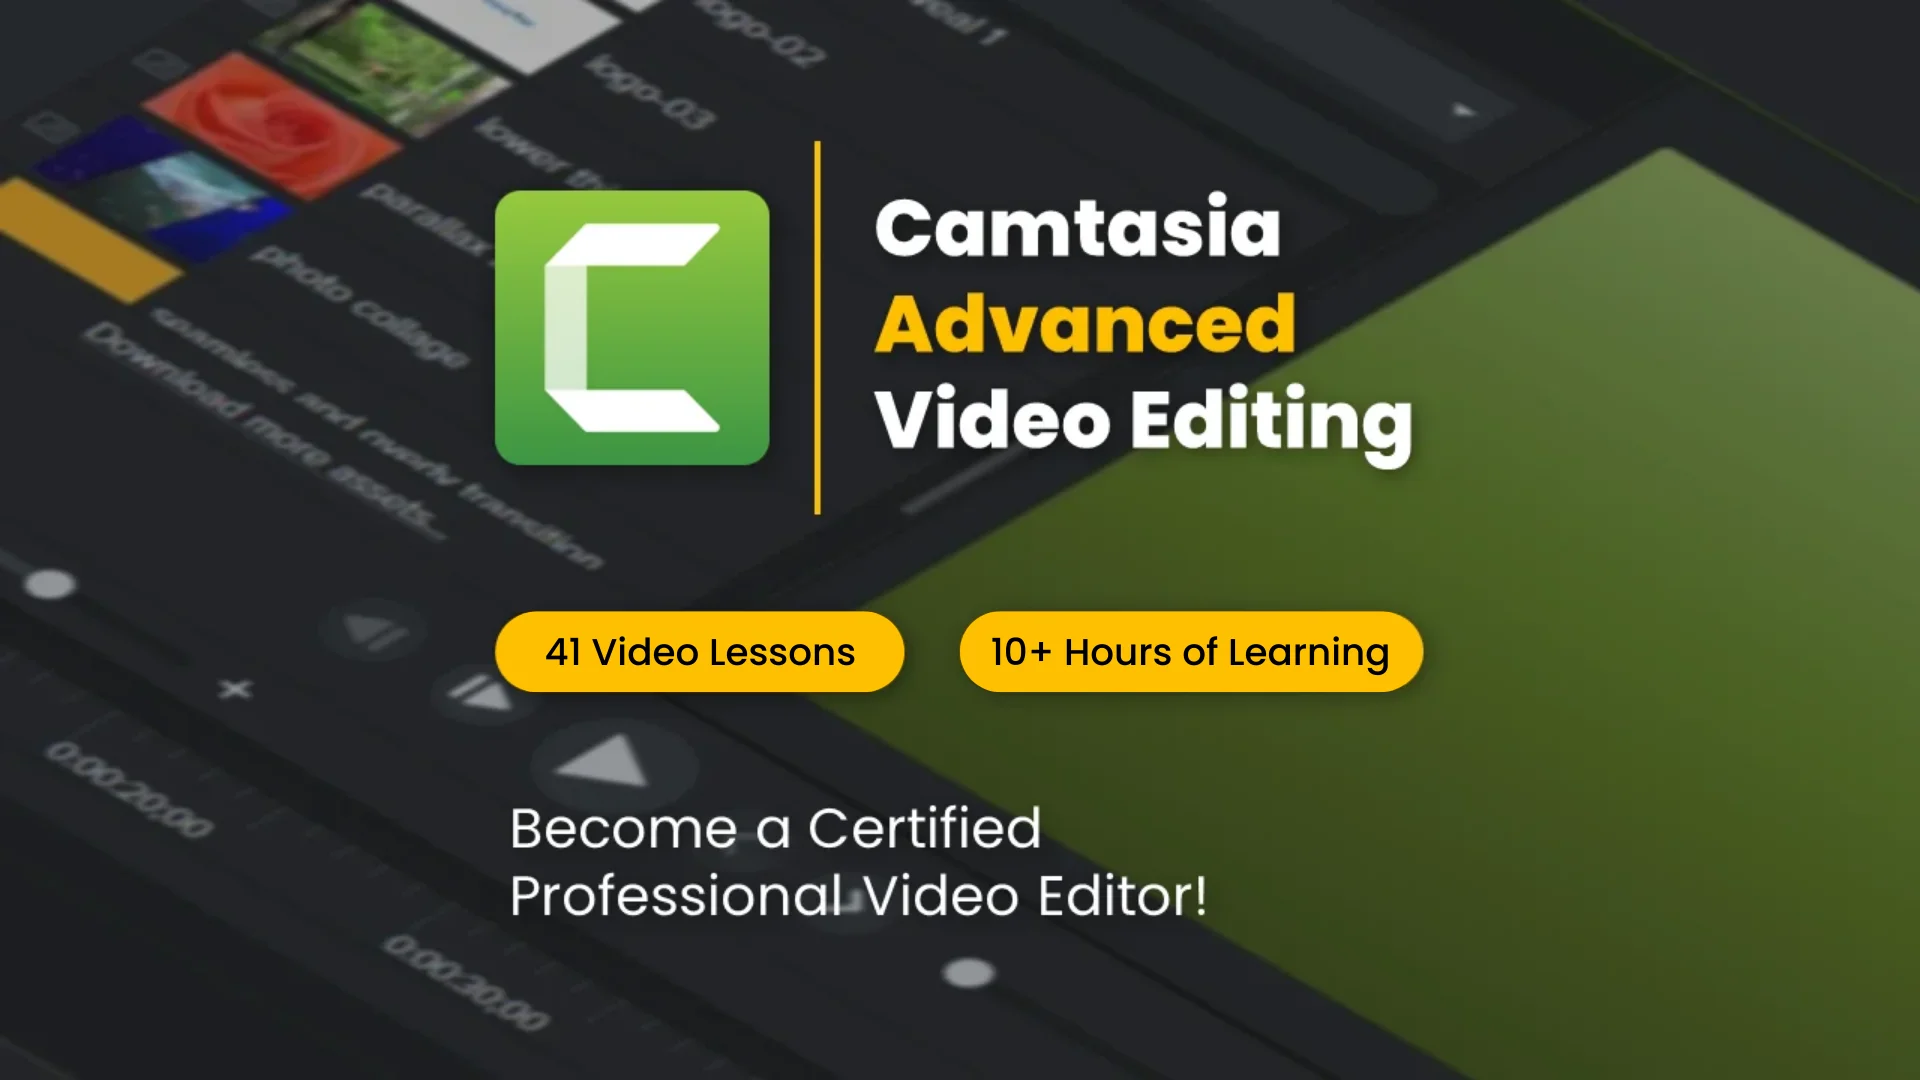 Camtasia Advanced Video Editing